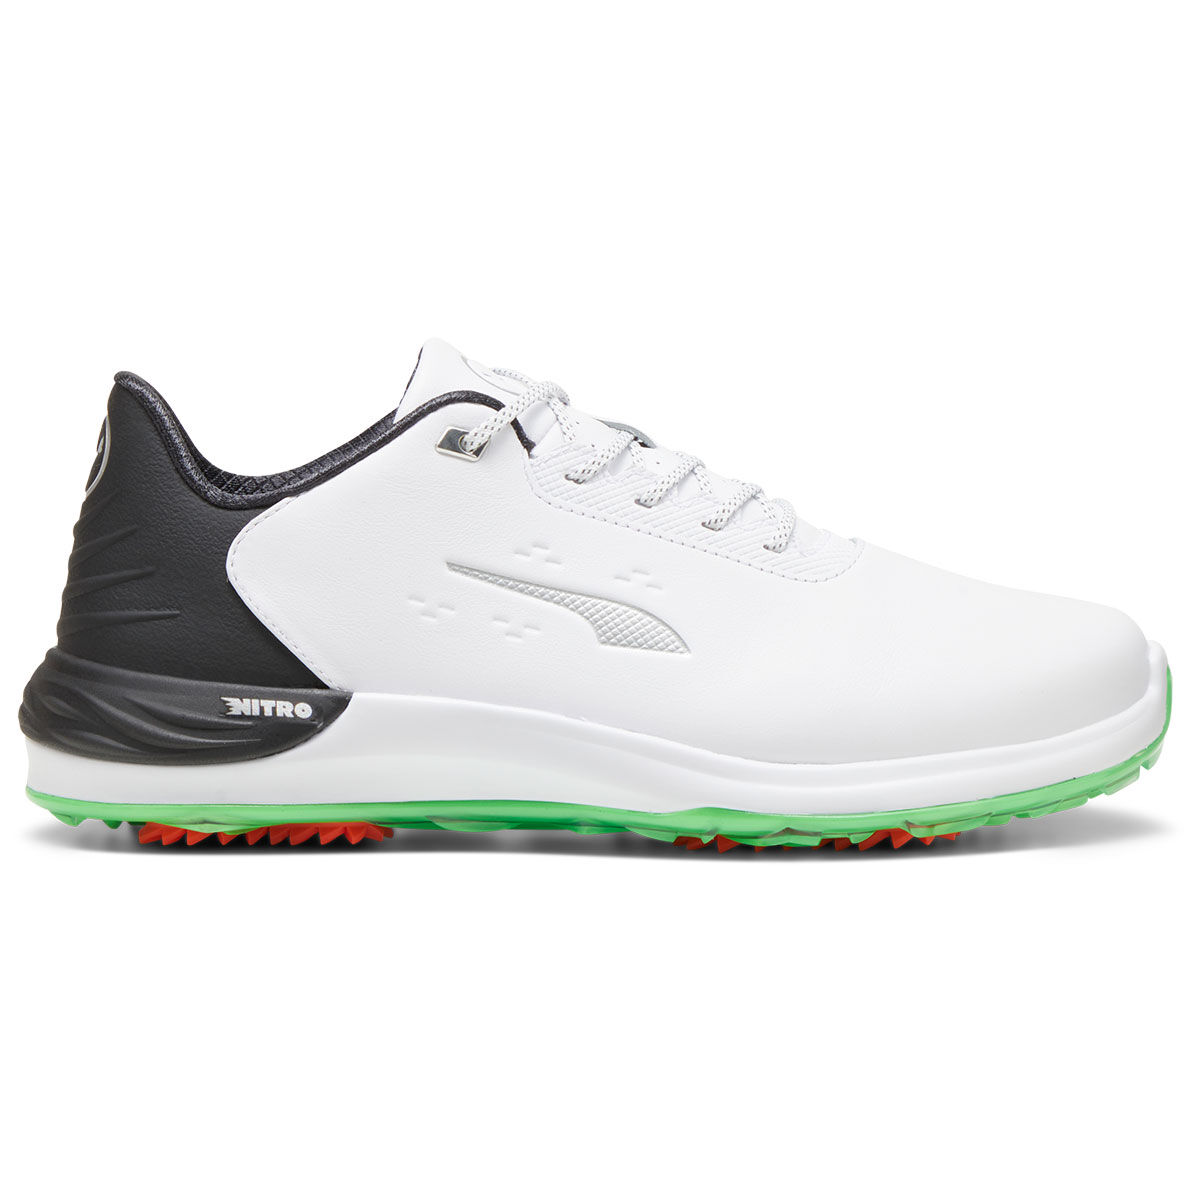 PUMA Men’s Phantomcat NITRO + Waterproof Spiked Golf Shoes, Mens, White/black/fluro green pes, 8 | American Golf